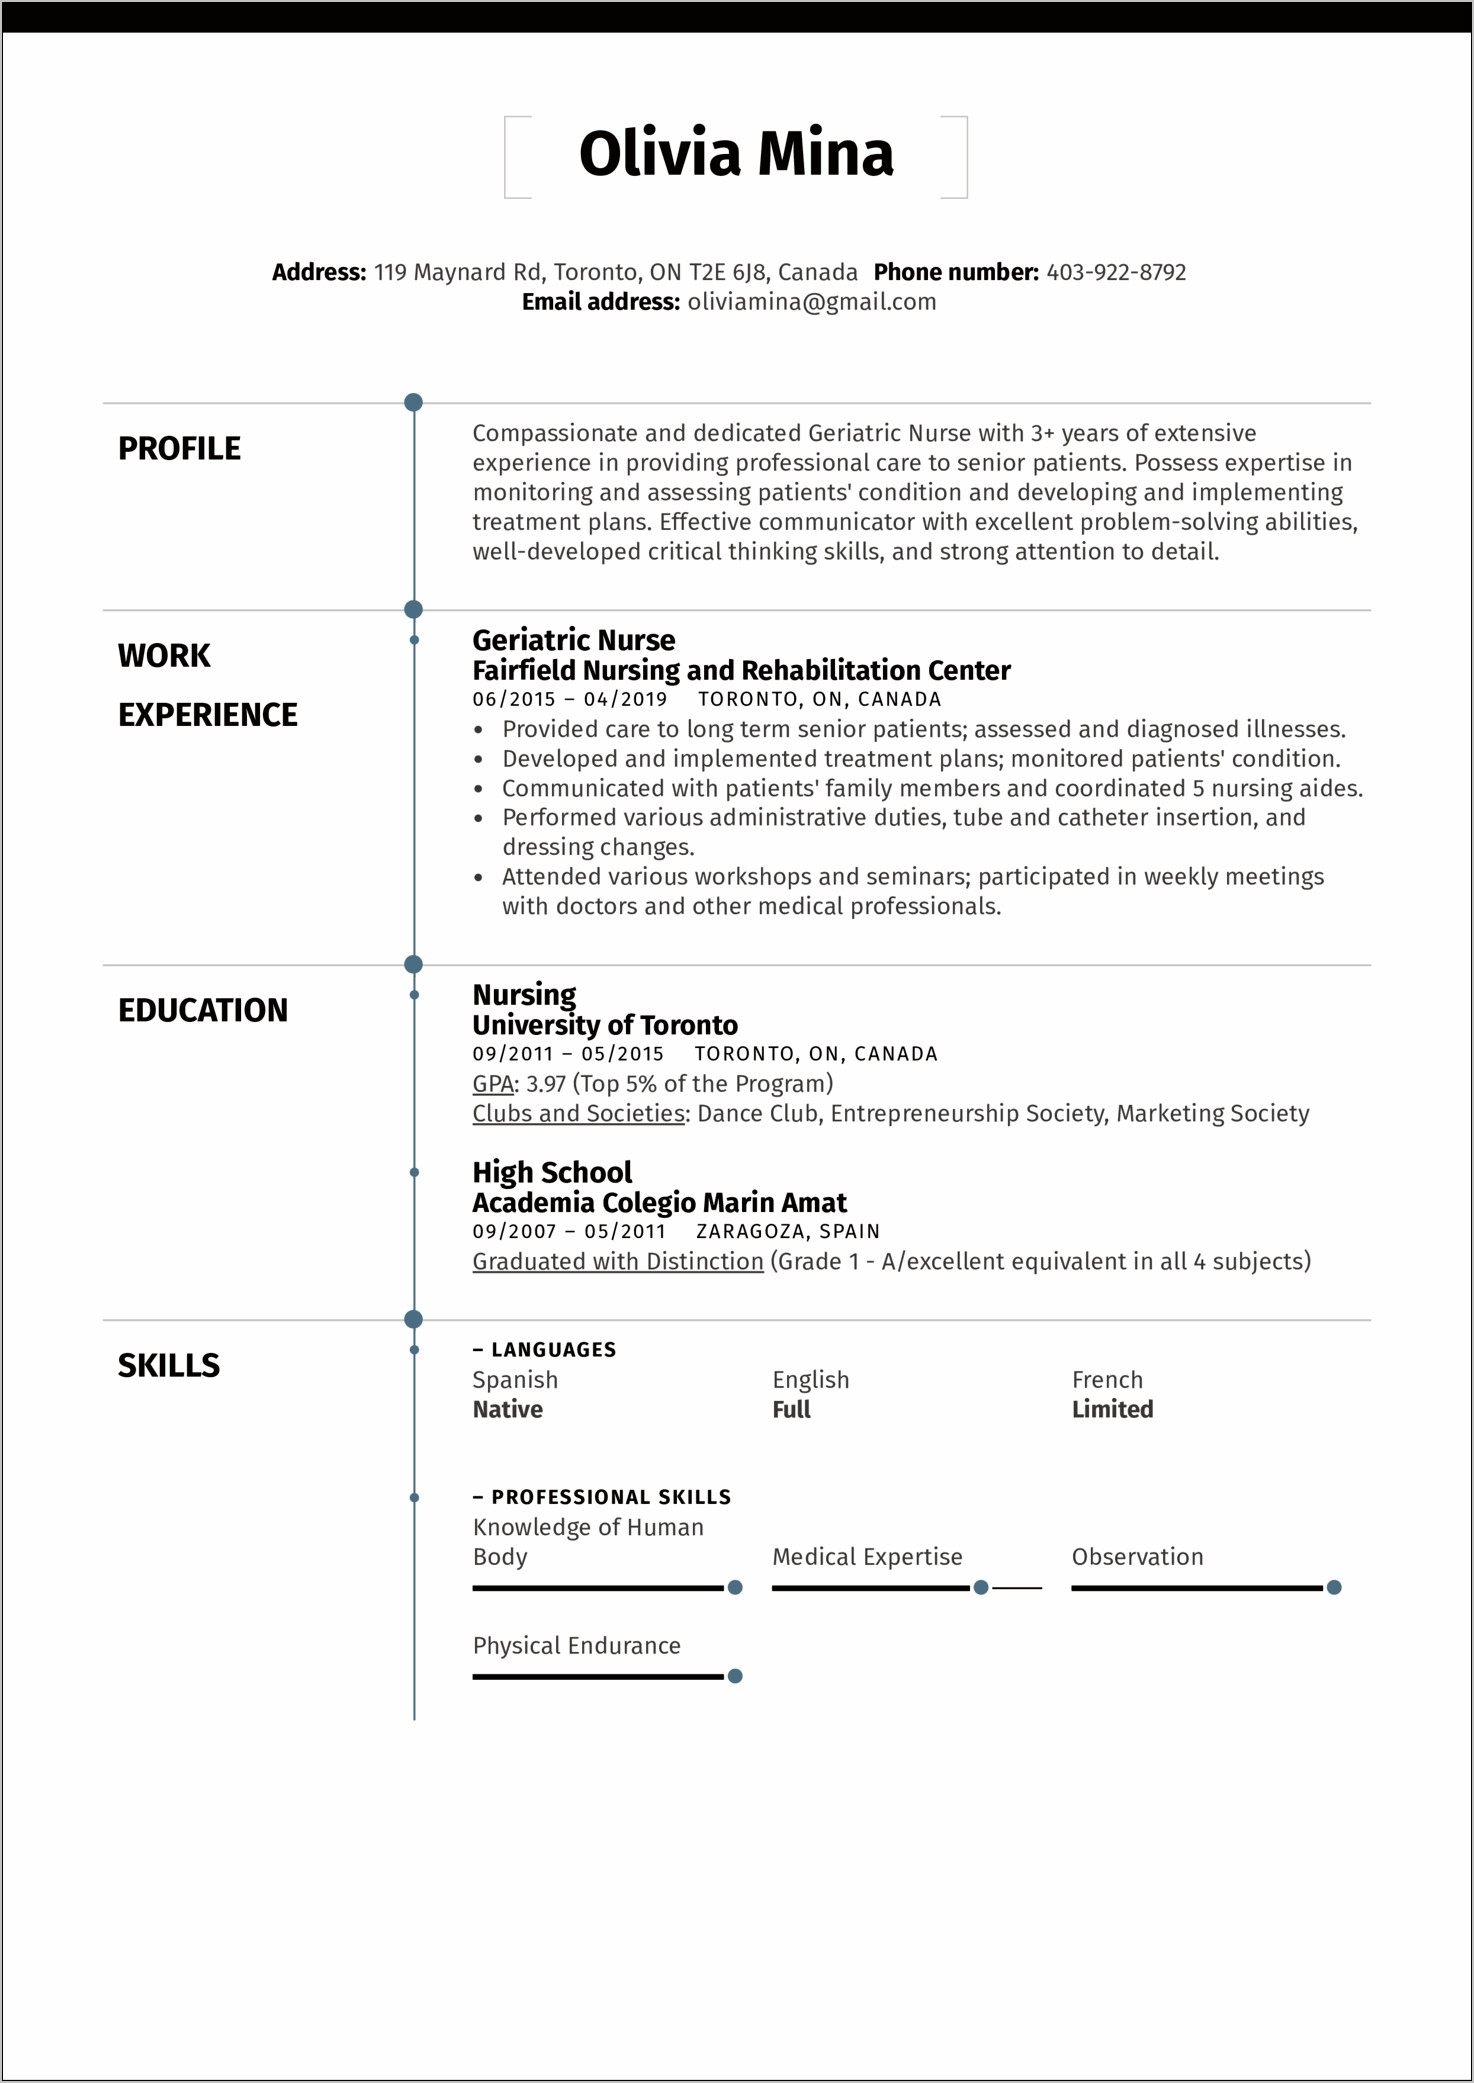 Sample Resume Of Lpn Nurse